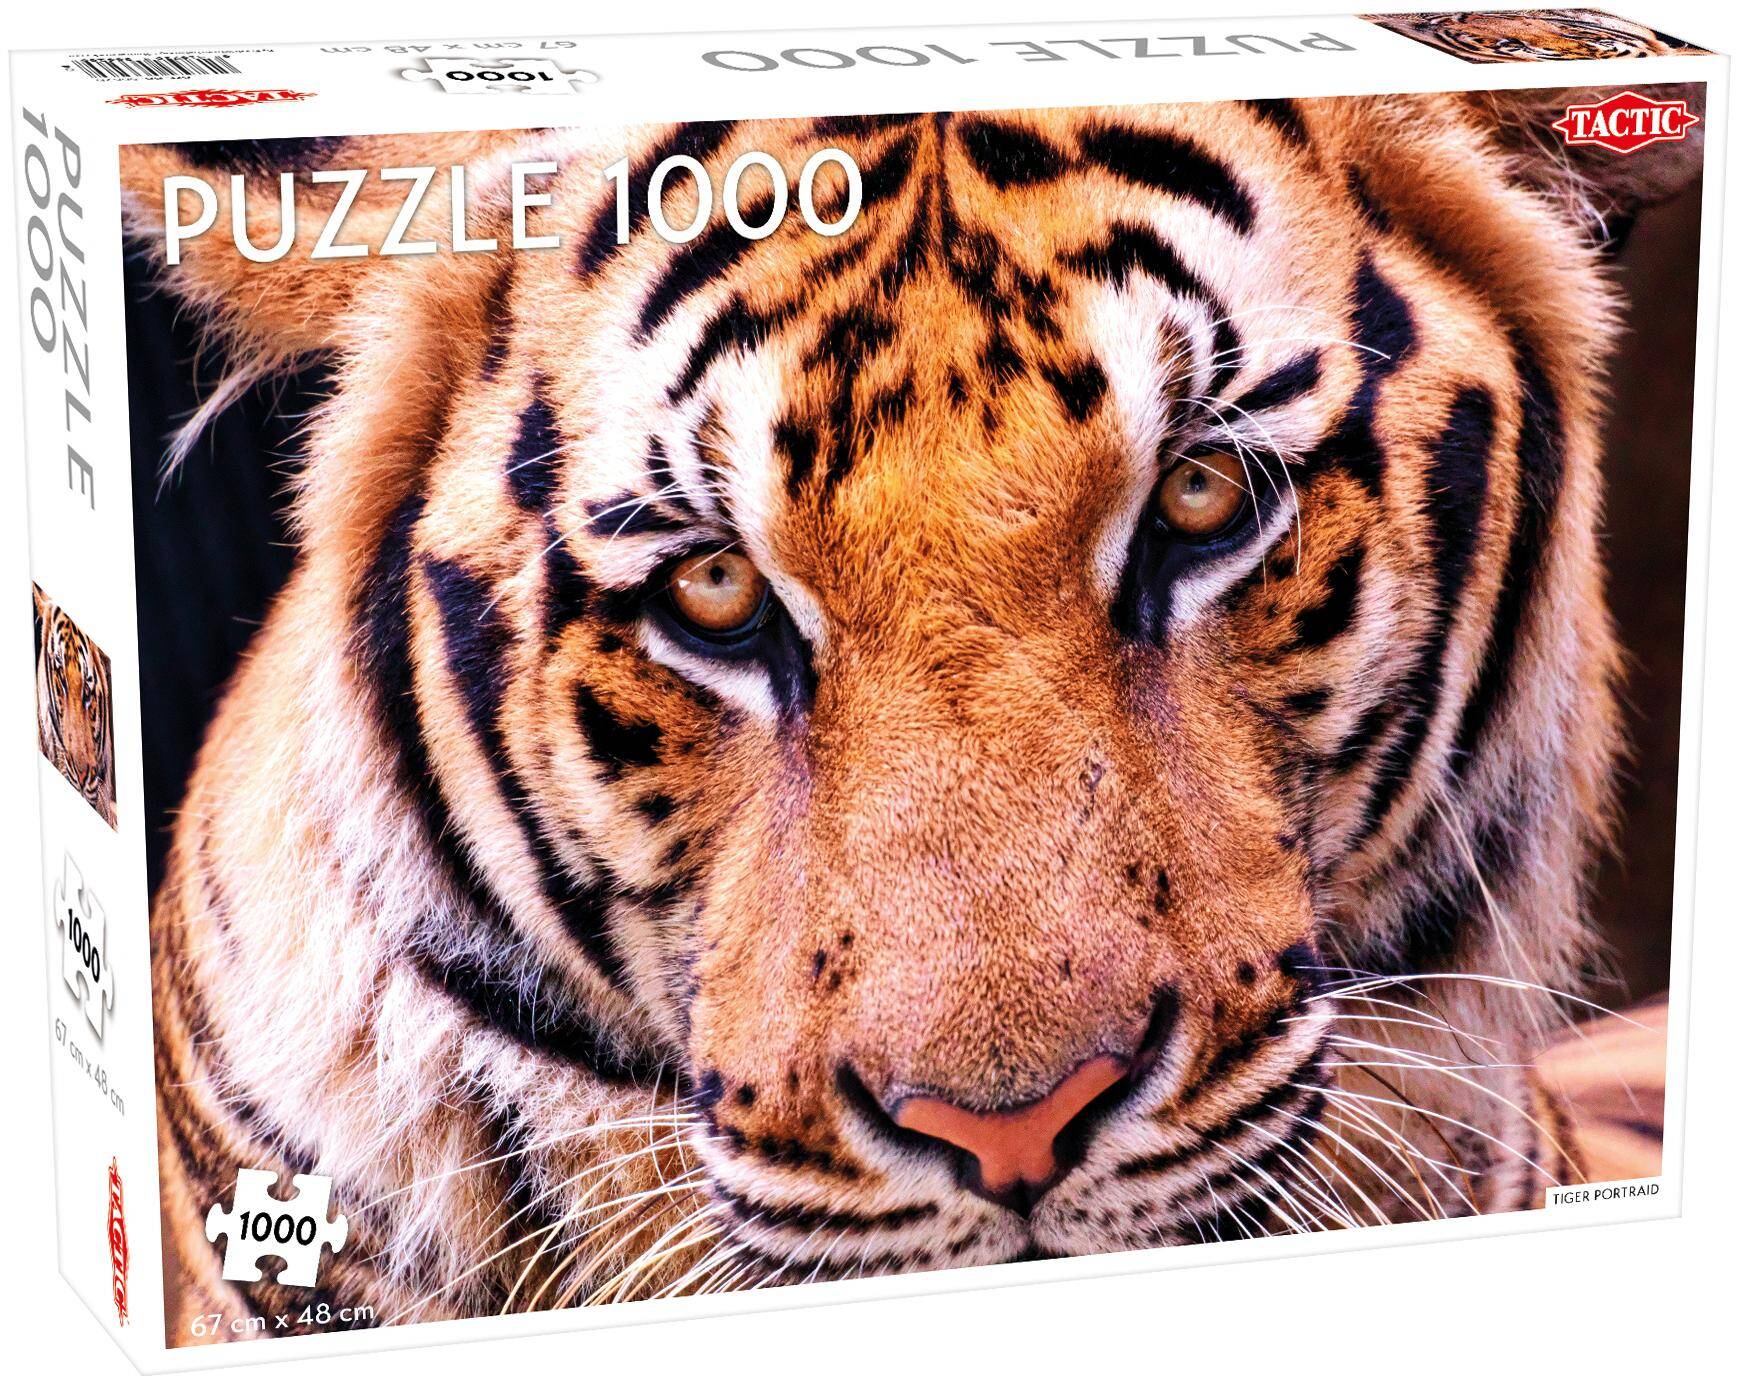 Puzzle 1000 Animals Tiger Portrait